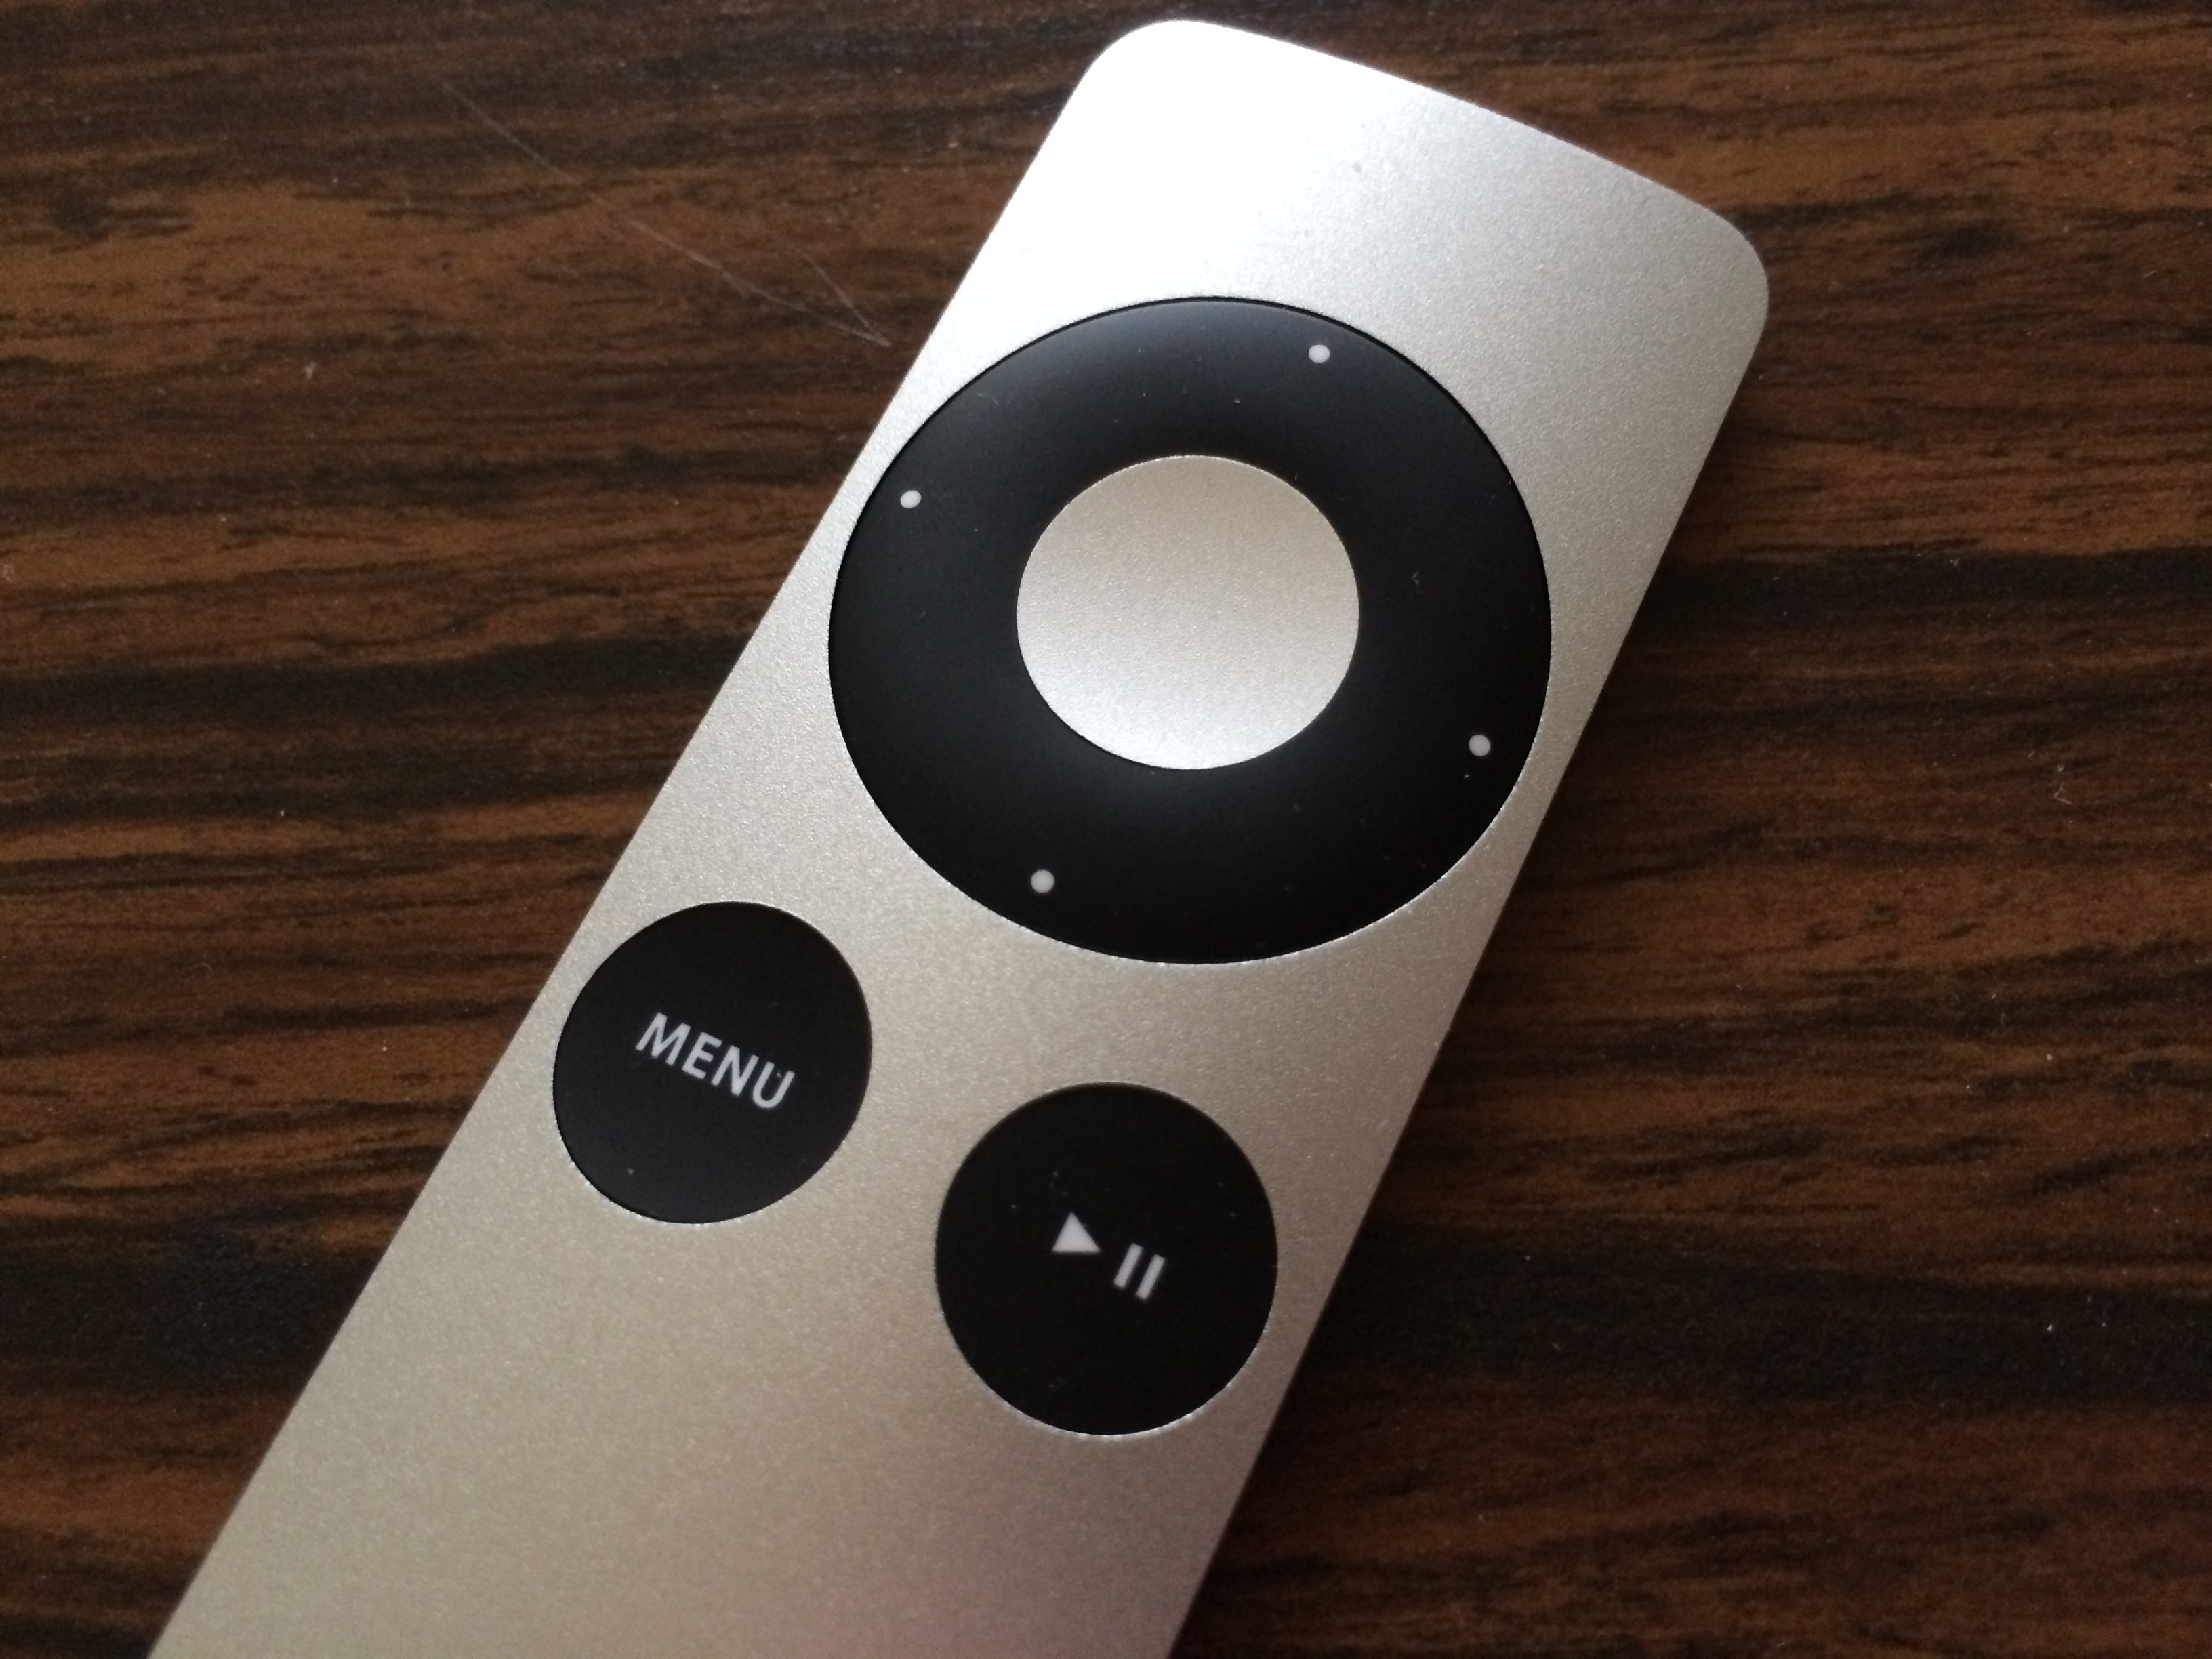 Apple TV remote